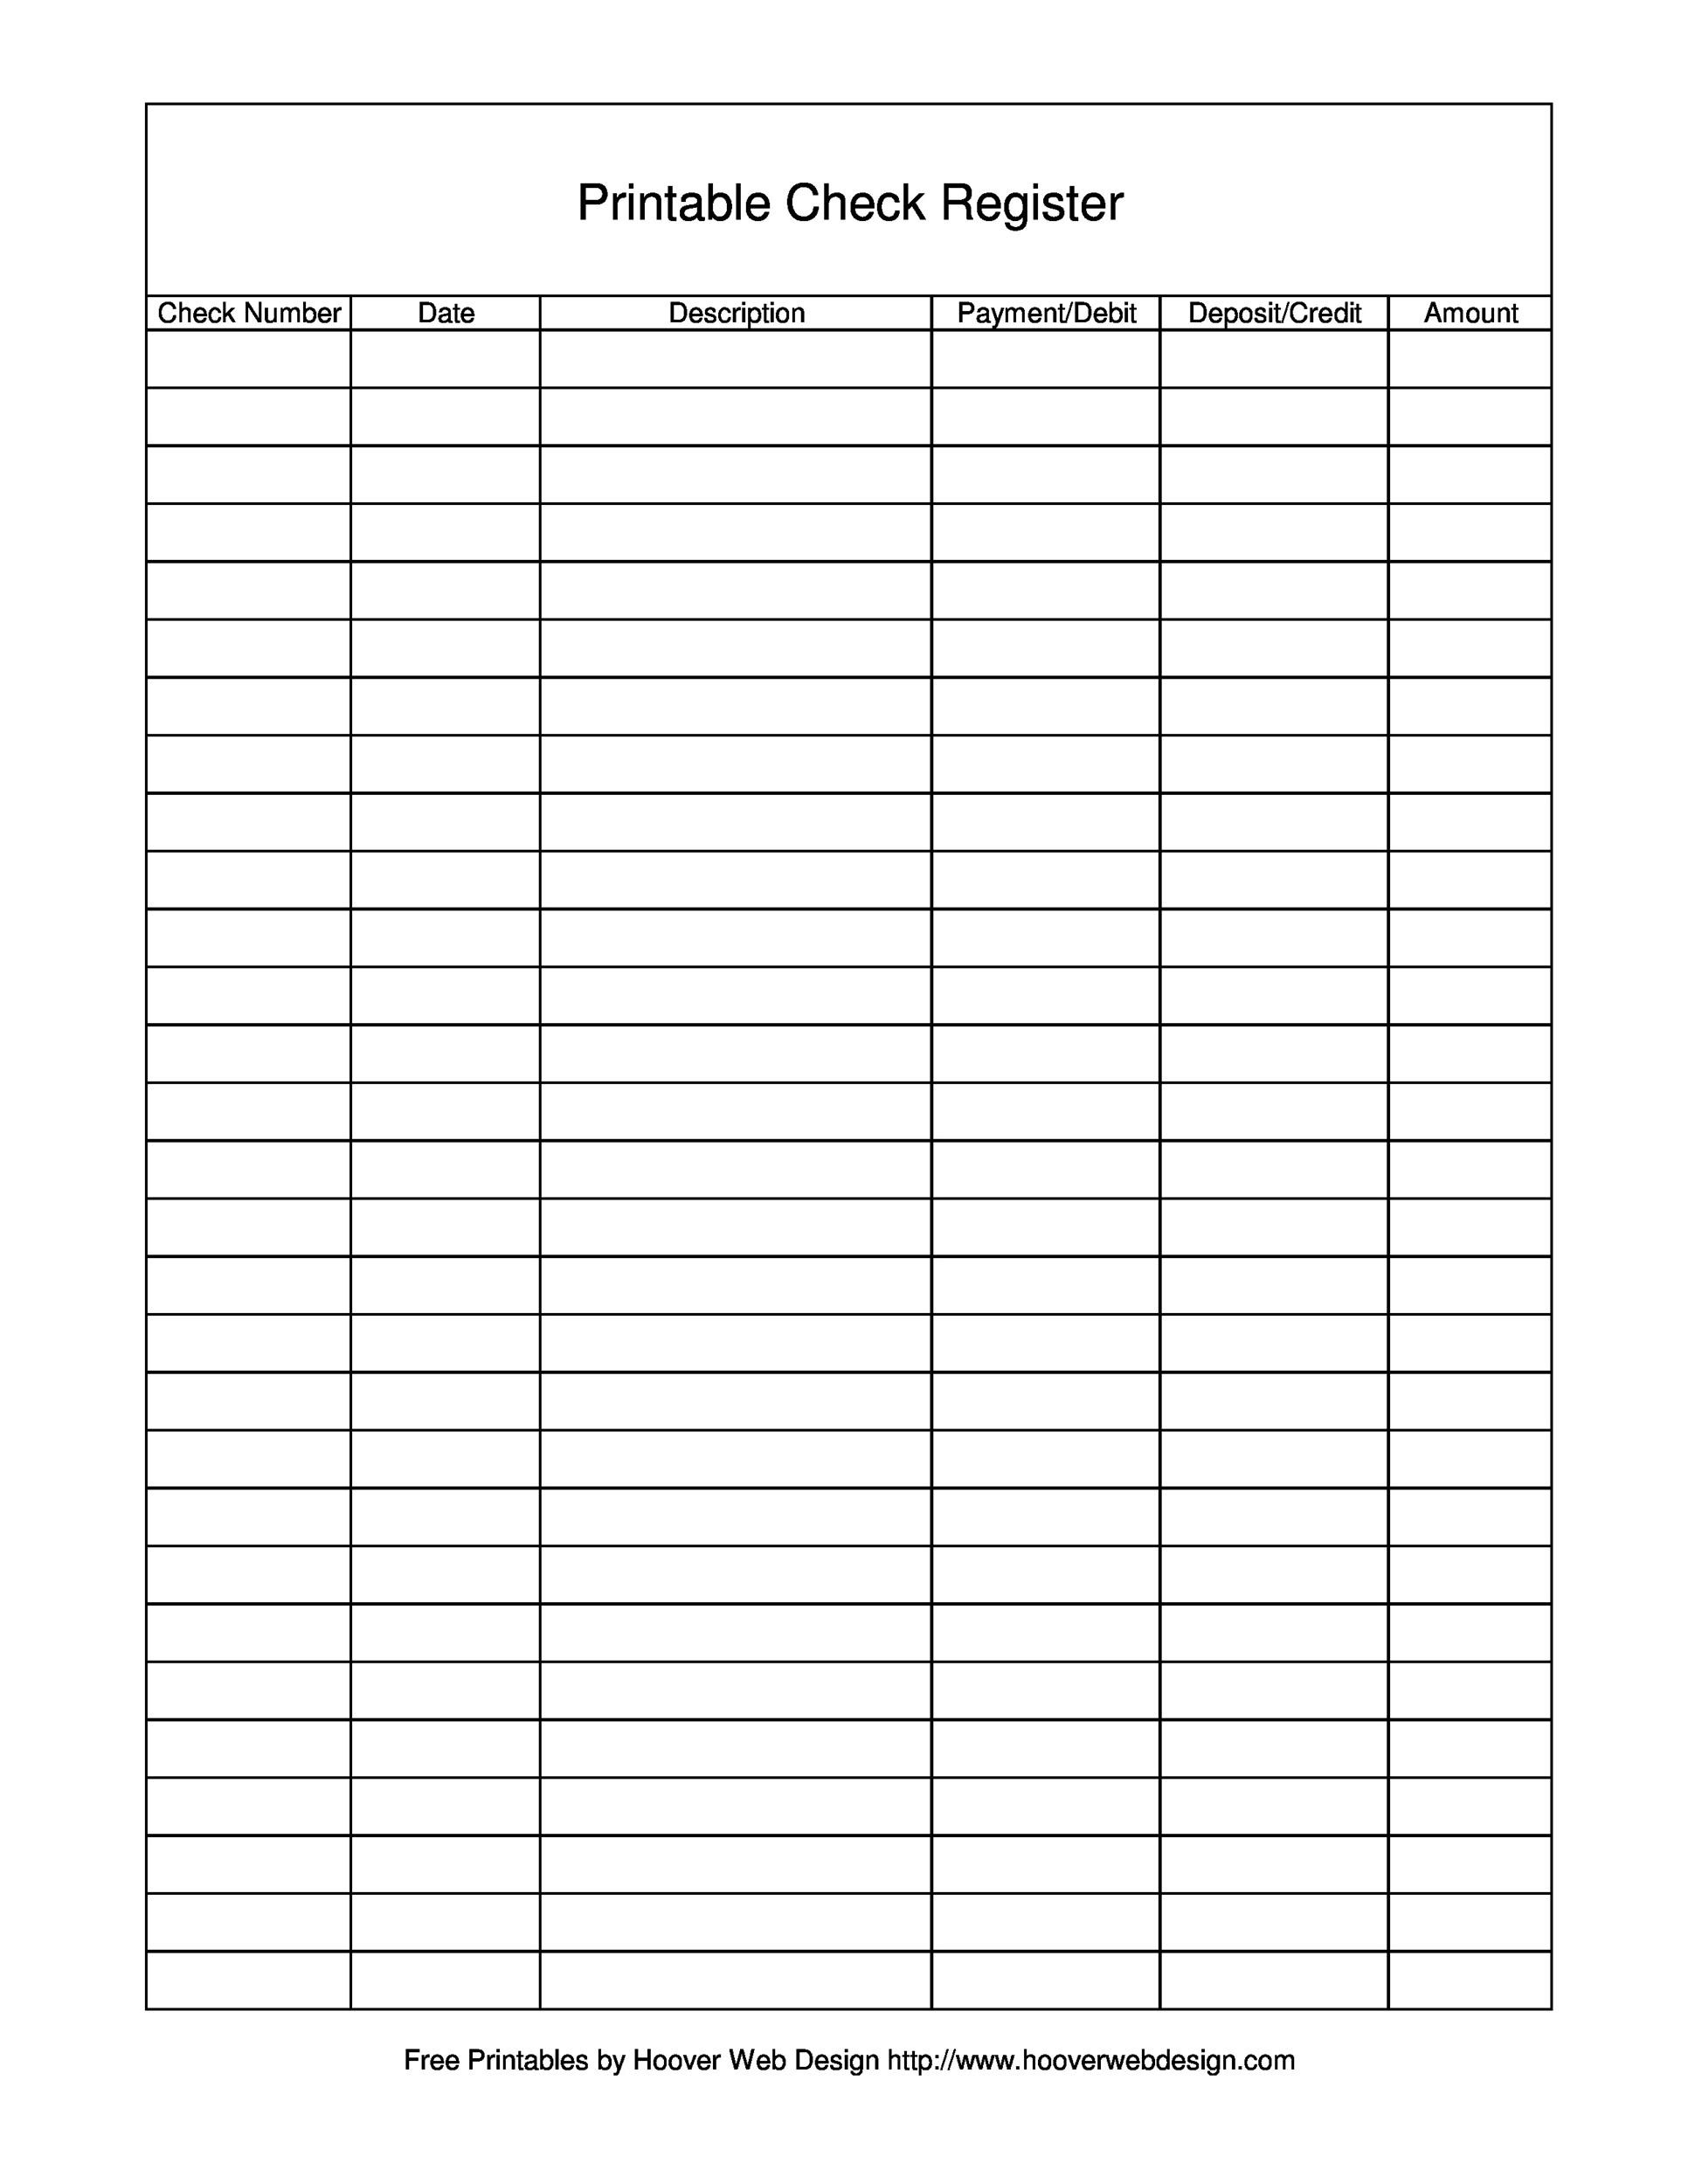 39 Checkbook Register Templates 100 Free Printable TemplateLab - Free Printable Checkbook Register